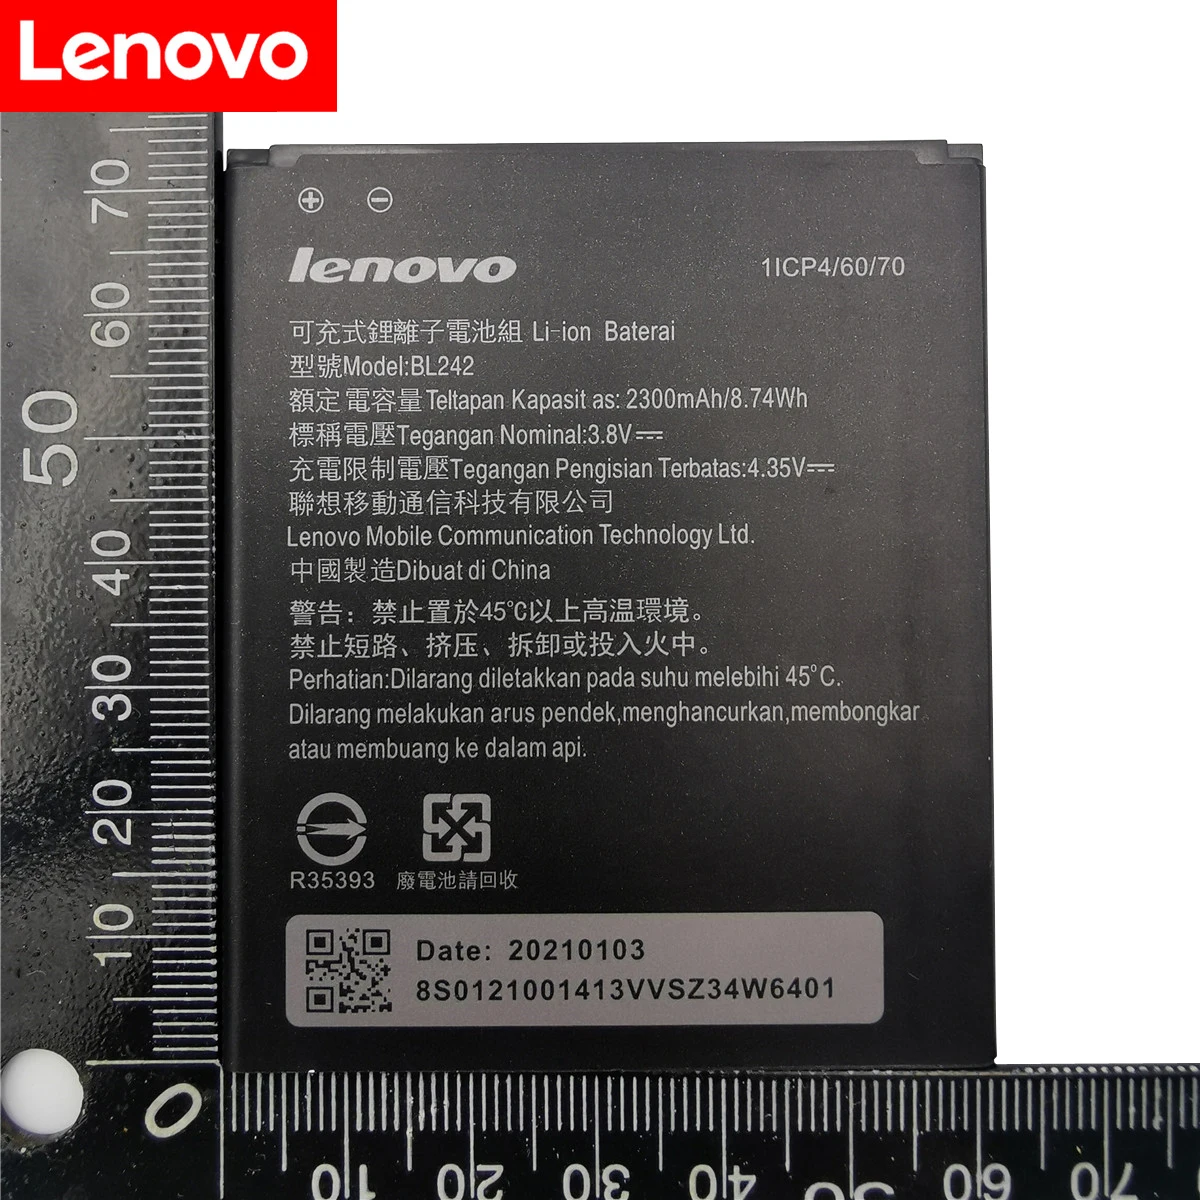 Original Lenovo A6010 Battery High Quality 2300mAh BL242 Back up Battery  Replacement For Lenovo A6010 Plus Mobile Phone Battery|Mobile Phone  Batteries| - AliExpress